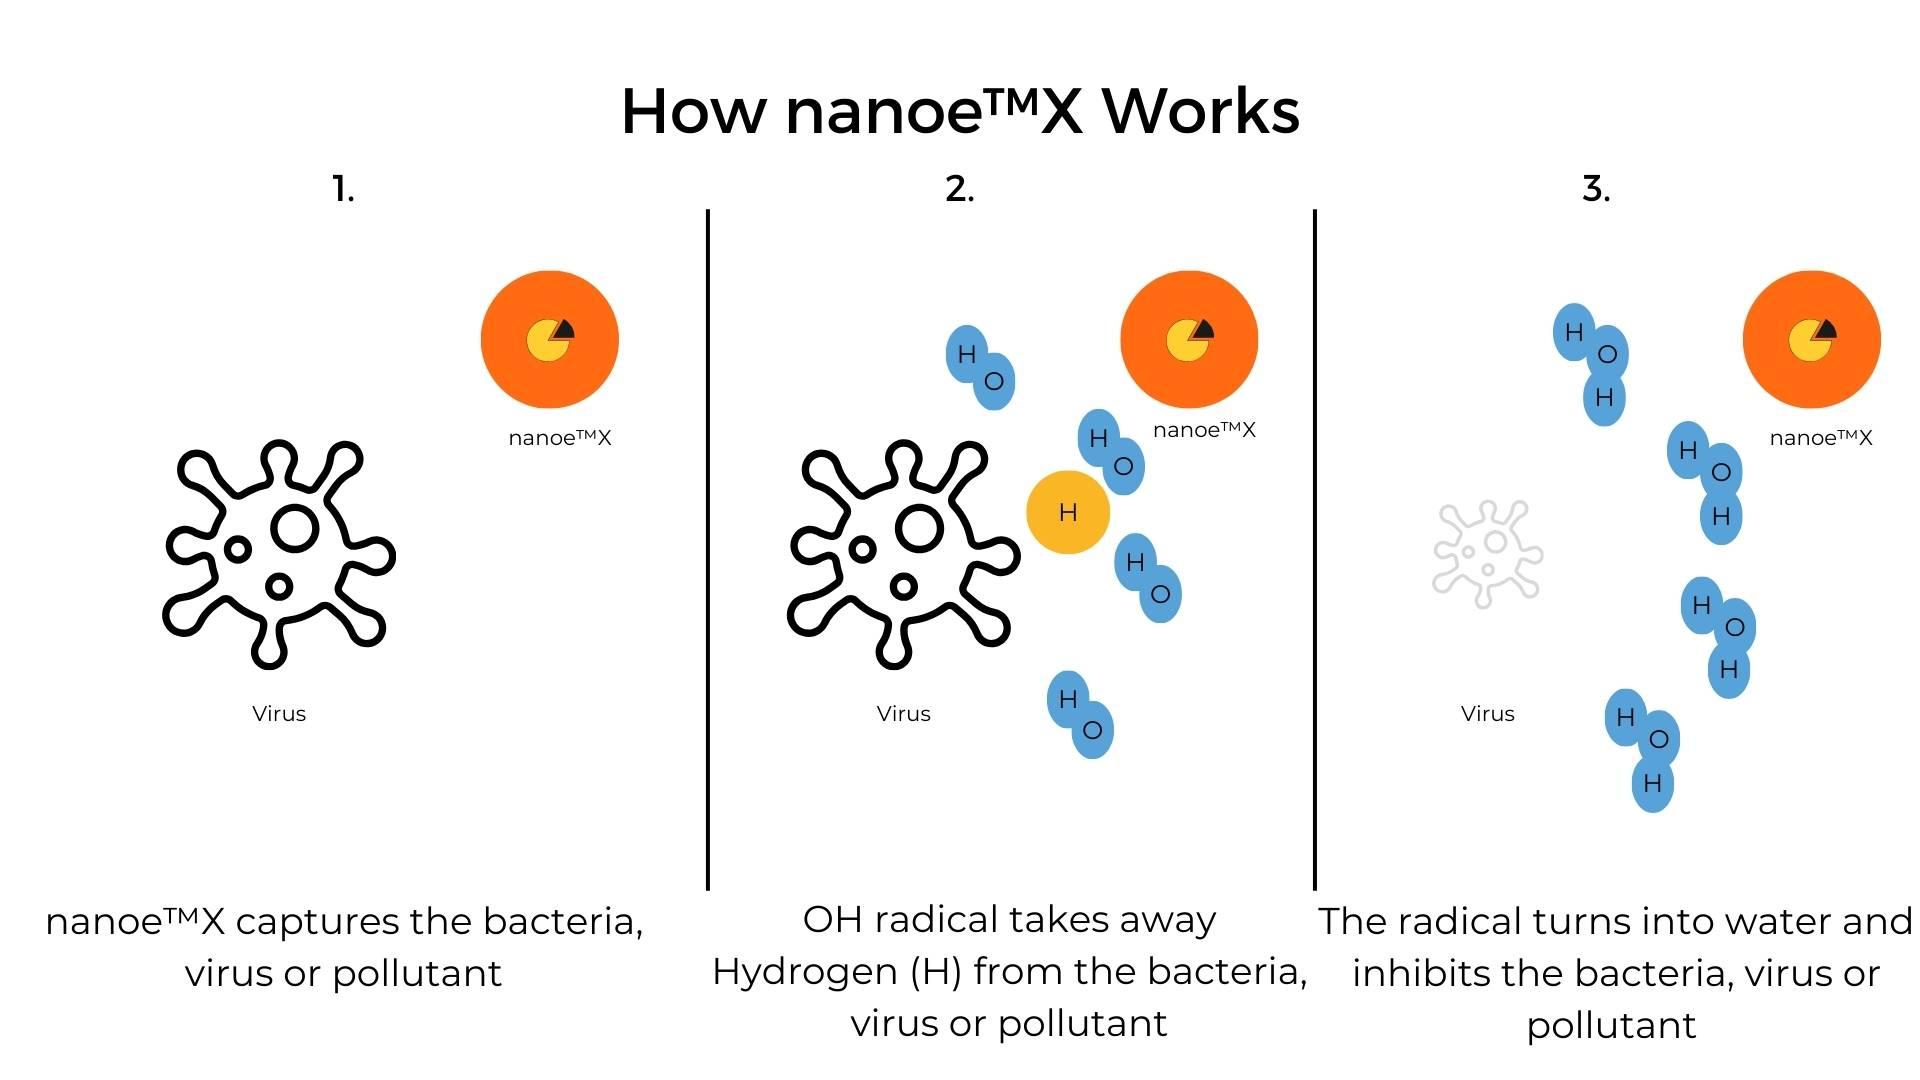 How nanoe™X works to inhibit viruses using OH Radicals